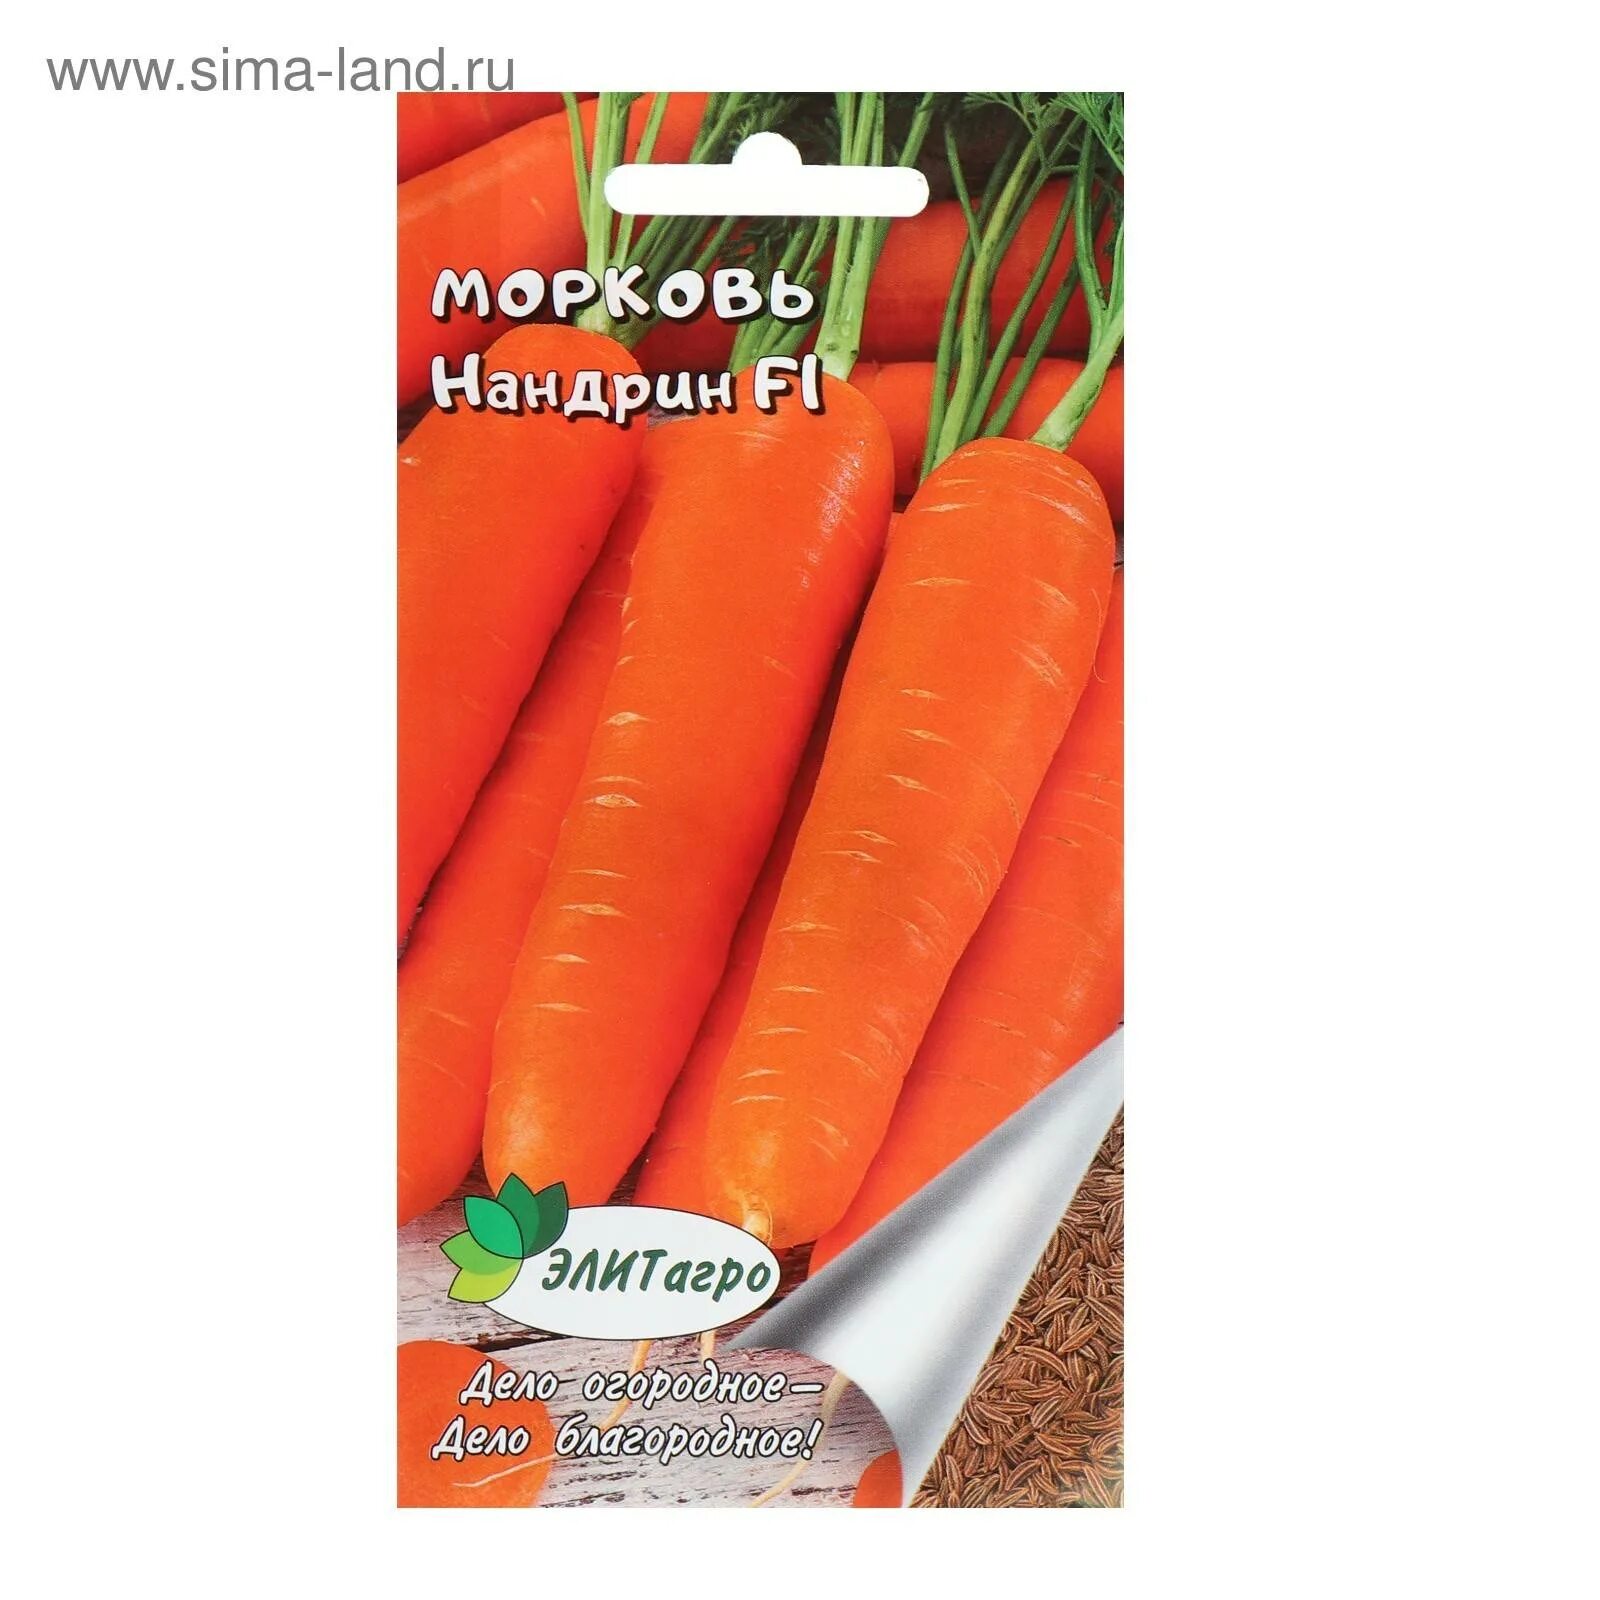 Морковь нандрин. Морковь Нандрин f1. Семена моркови Нандрин. Морковь сорт Нандрин. Морковь чемпион f1.